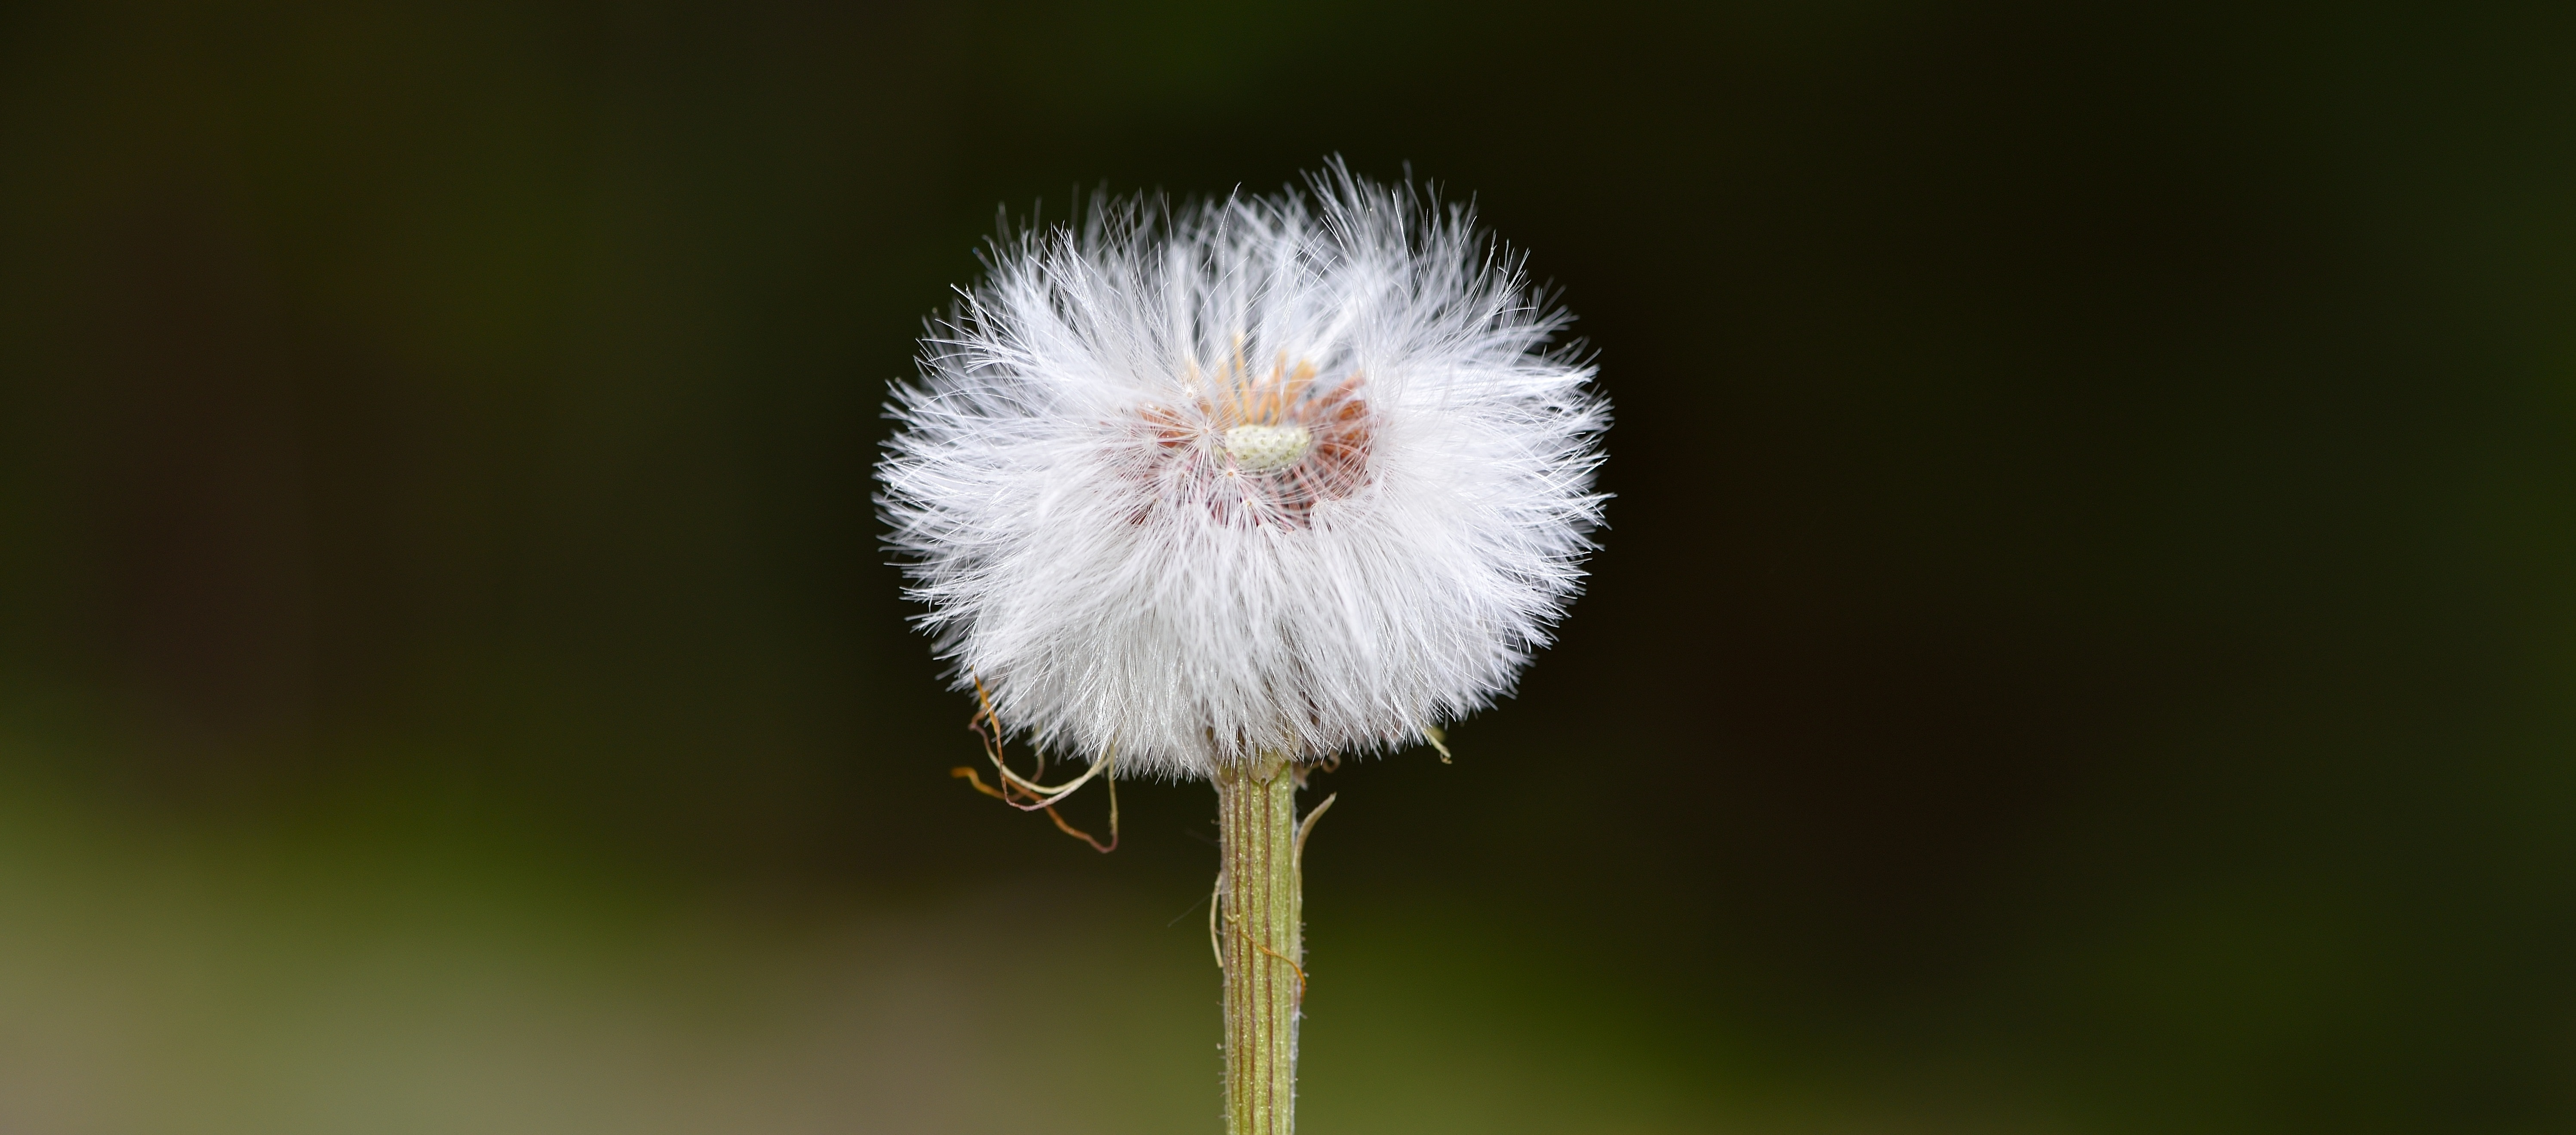 focus photography of dandelion